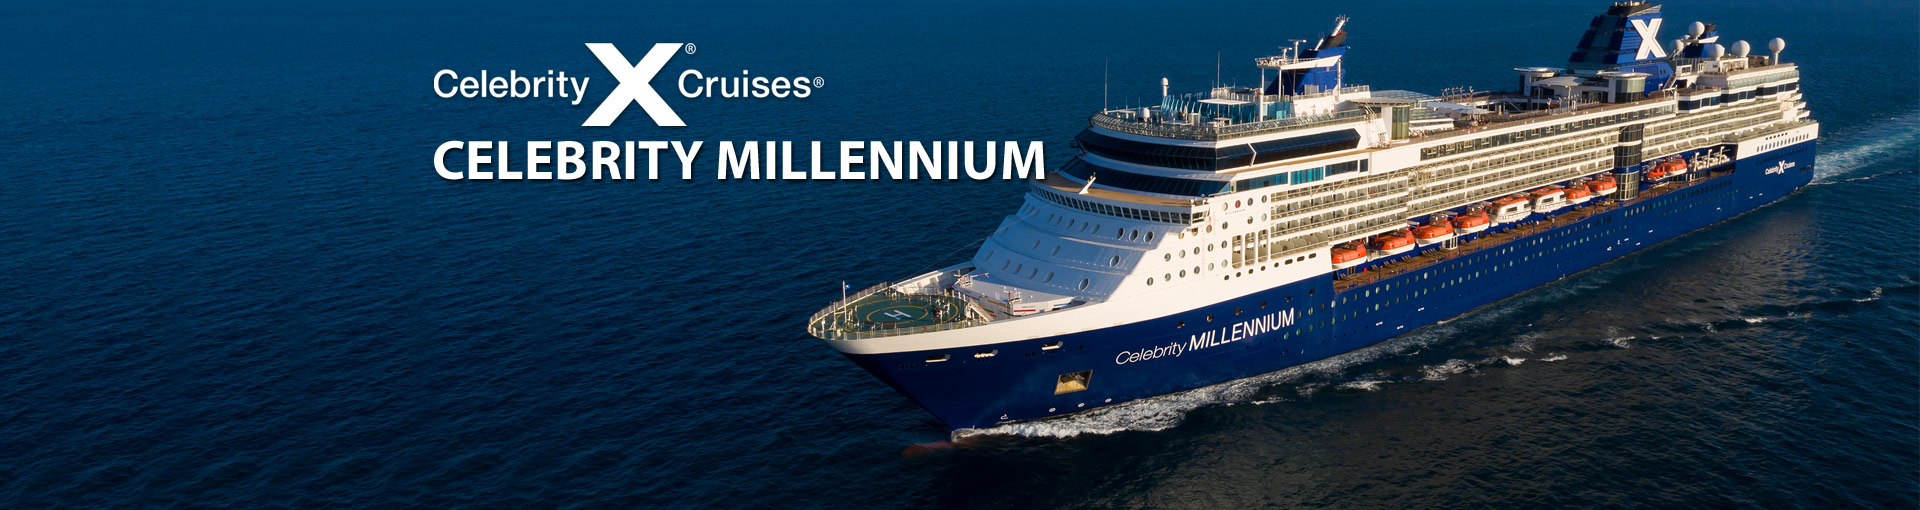 cruise advice millennium